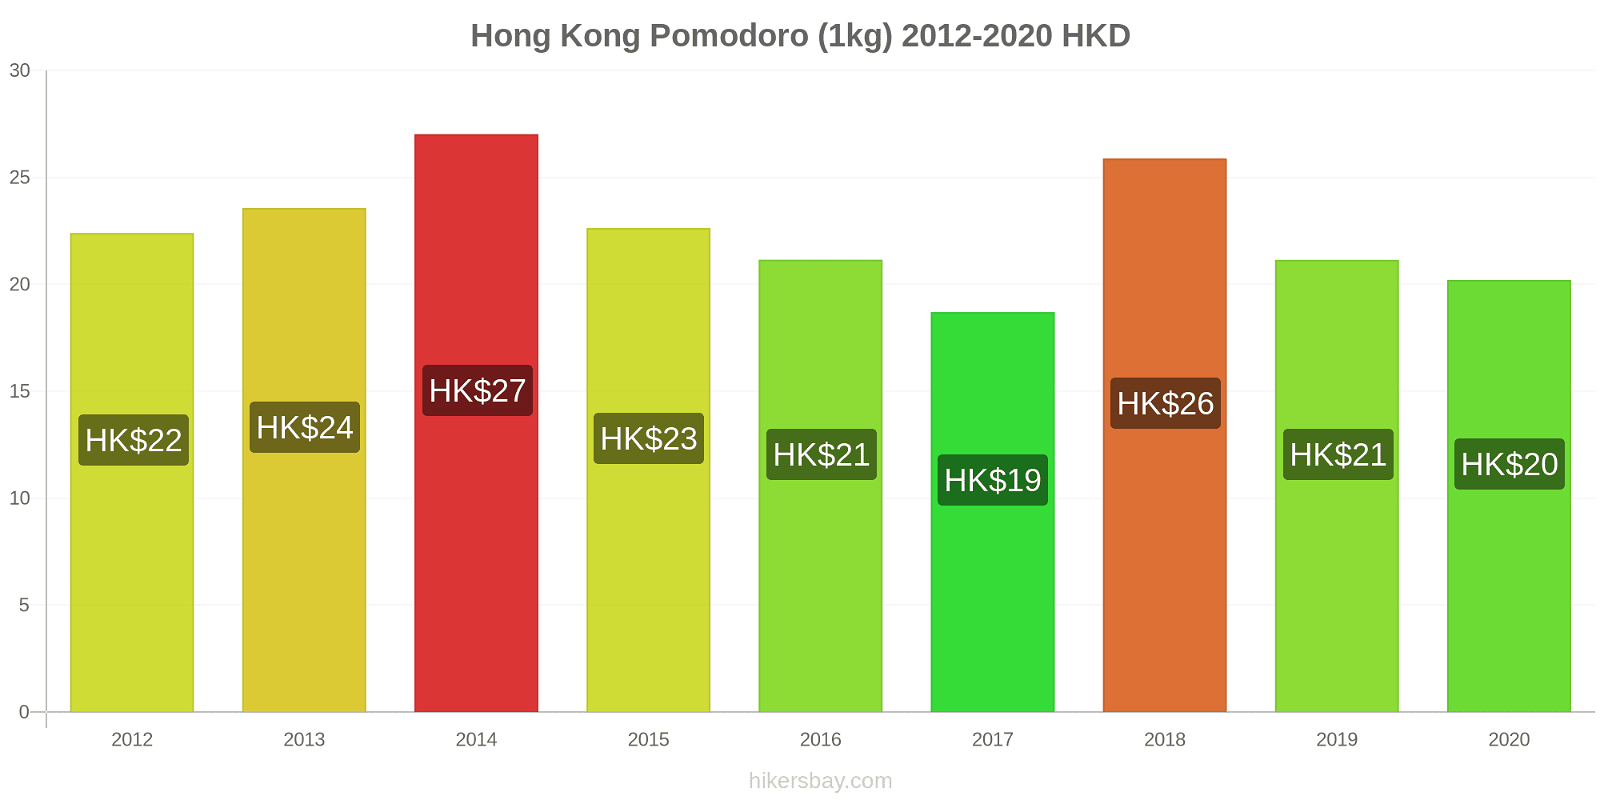 Hong Kong variazioni di prezzo Pomodoro (1kg) hikersbay.com